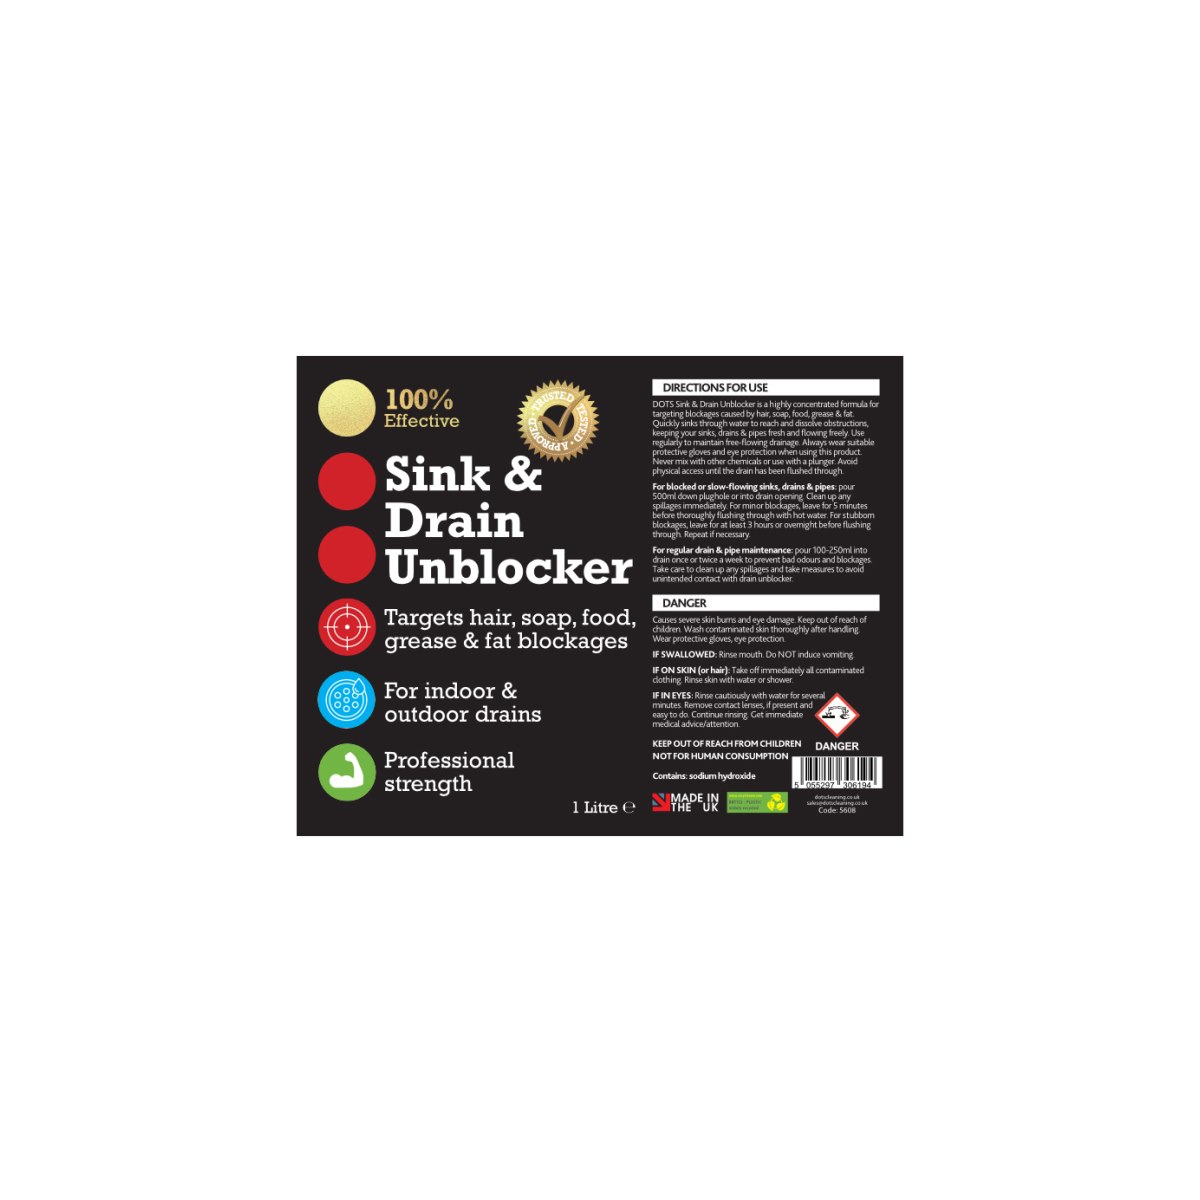 Dots Sink and Drain Unblocker Instructions